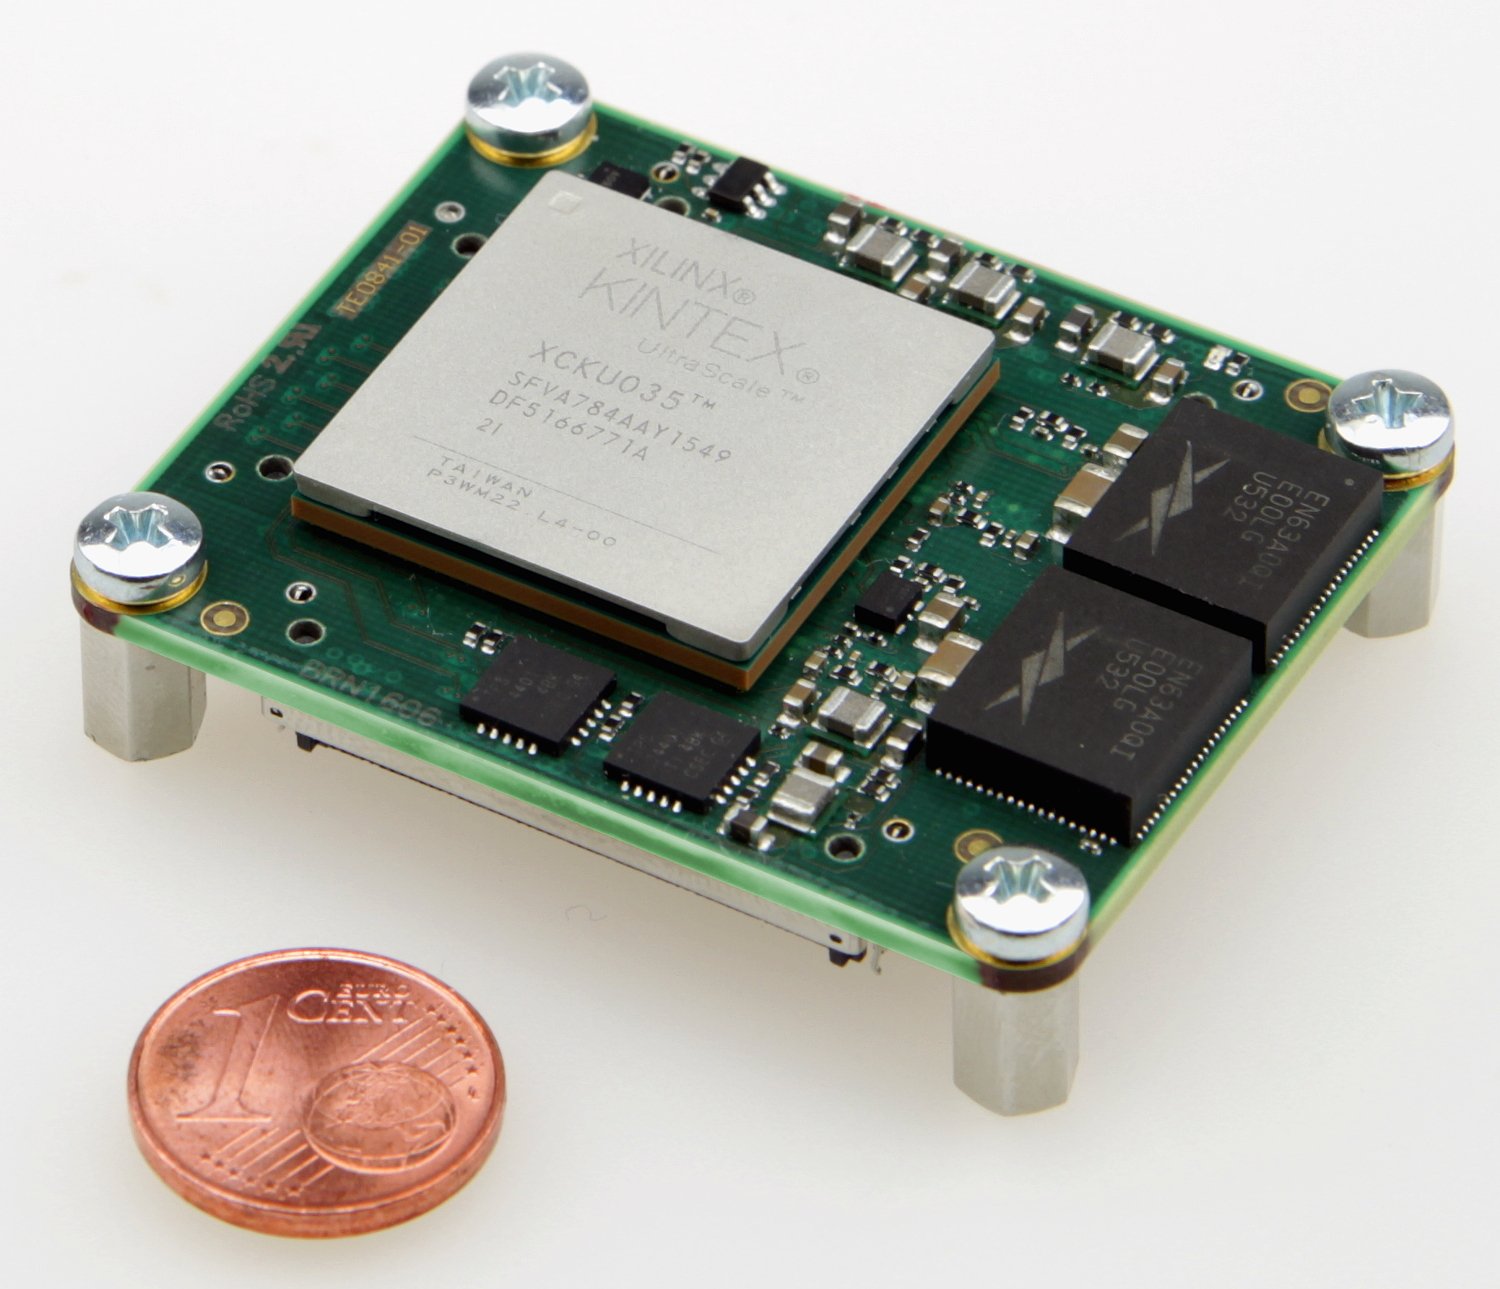 Sundance adds Xilinx Ultrascale FPGA to EMC-2 boards